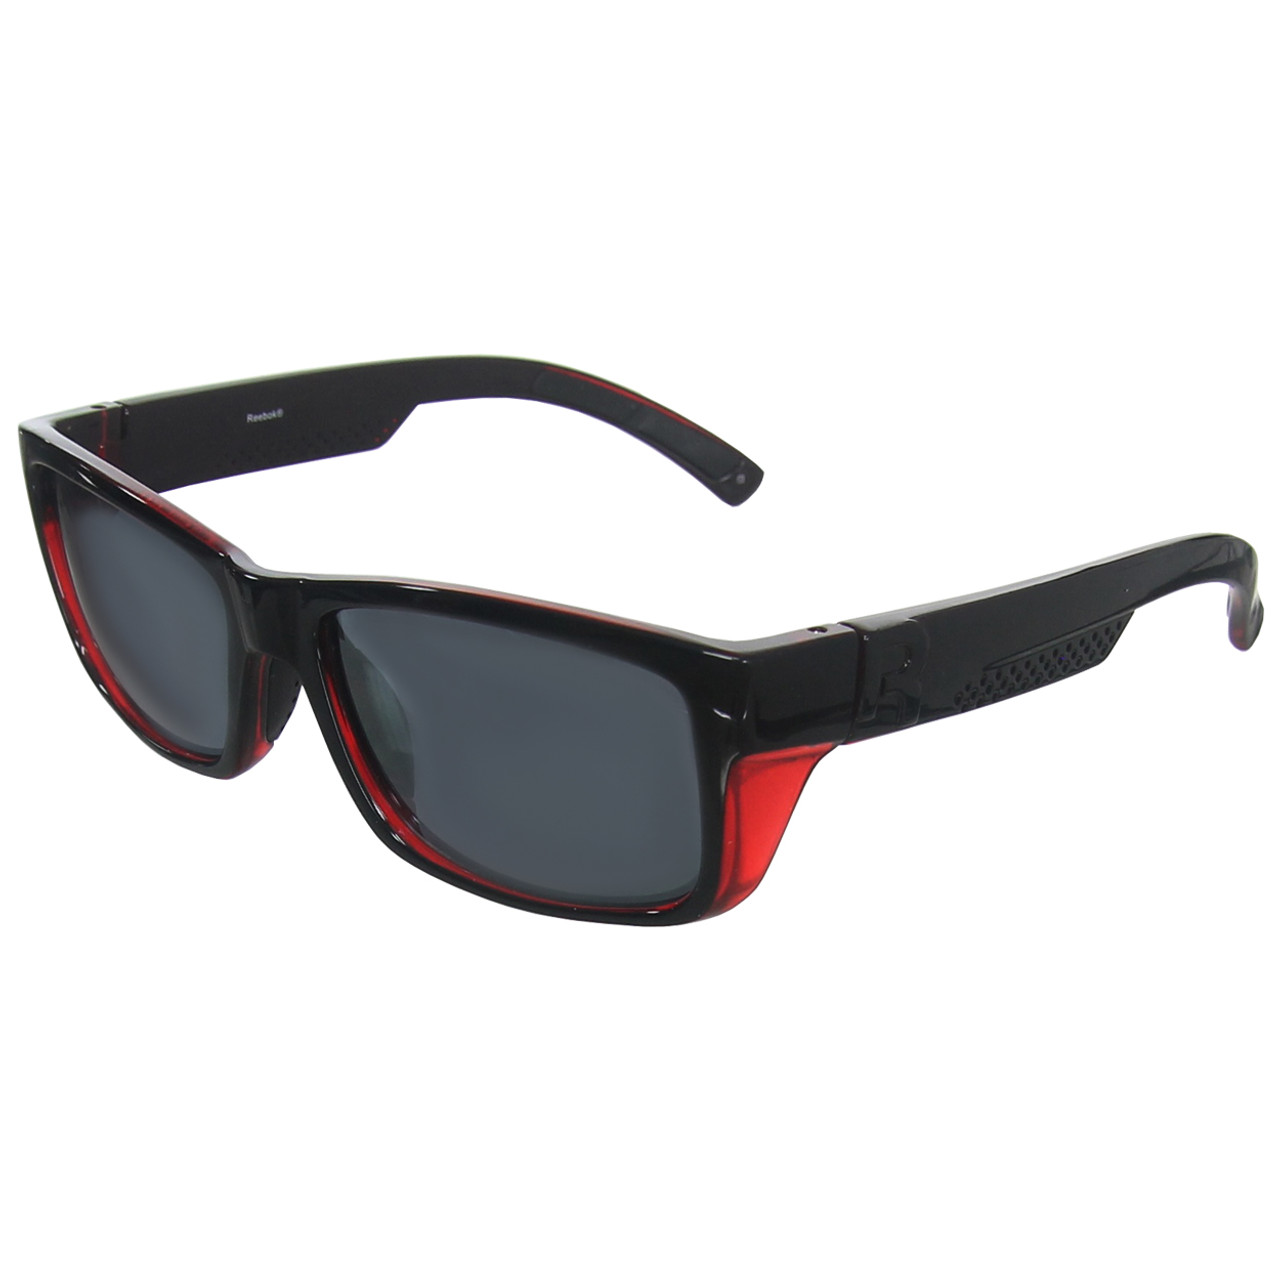 Reebok Golf Classic 1 Sunglasses 